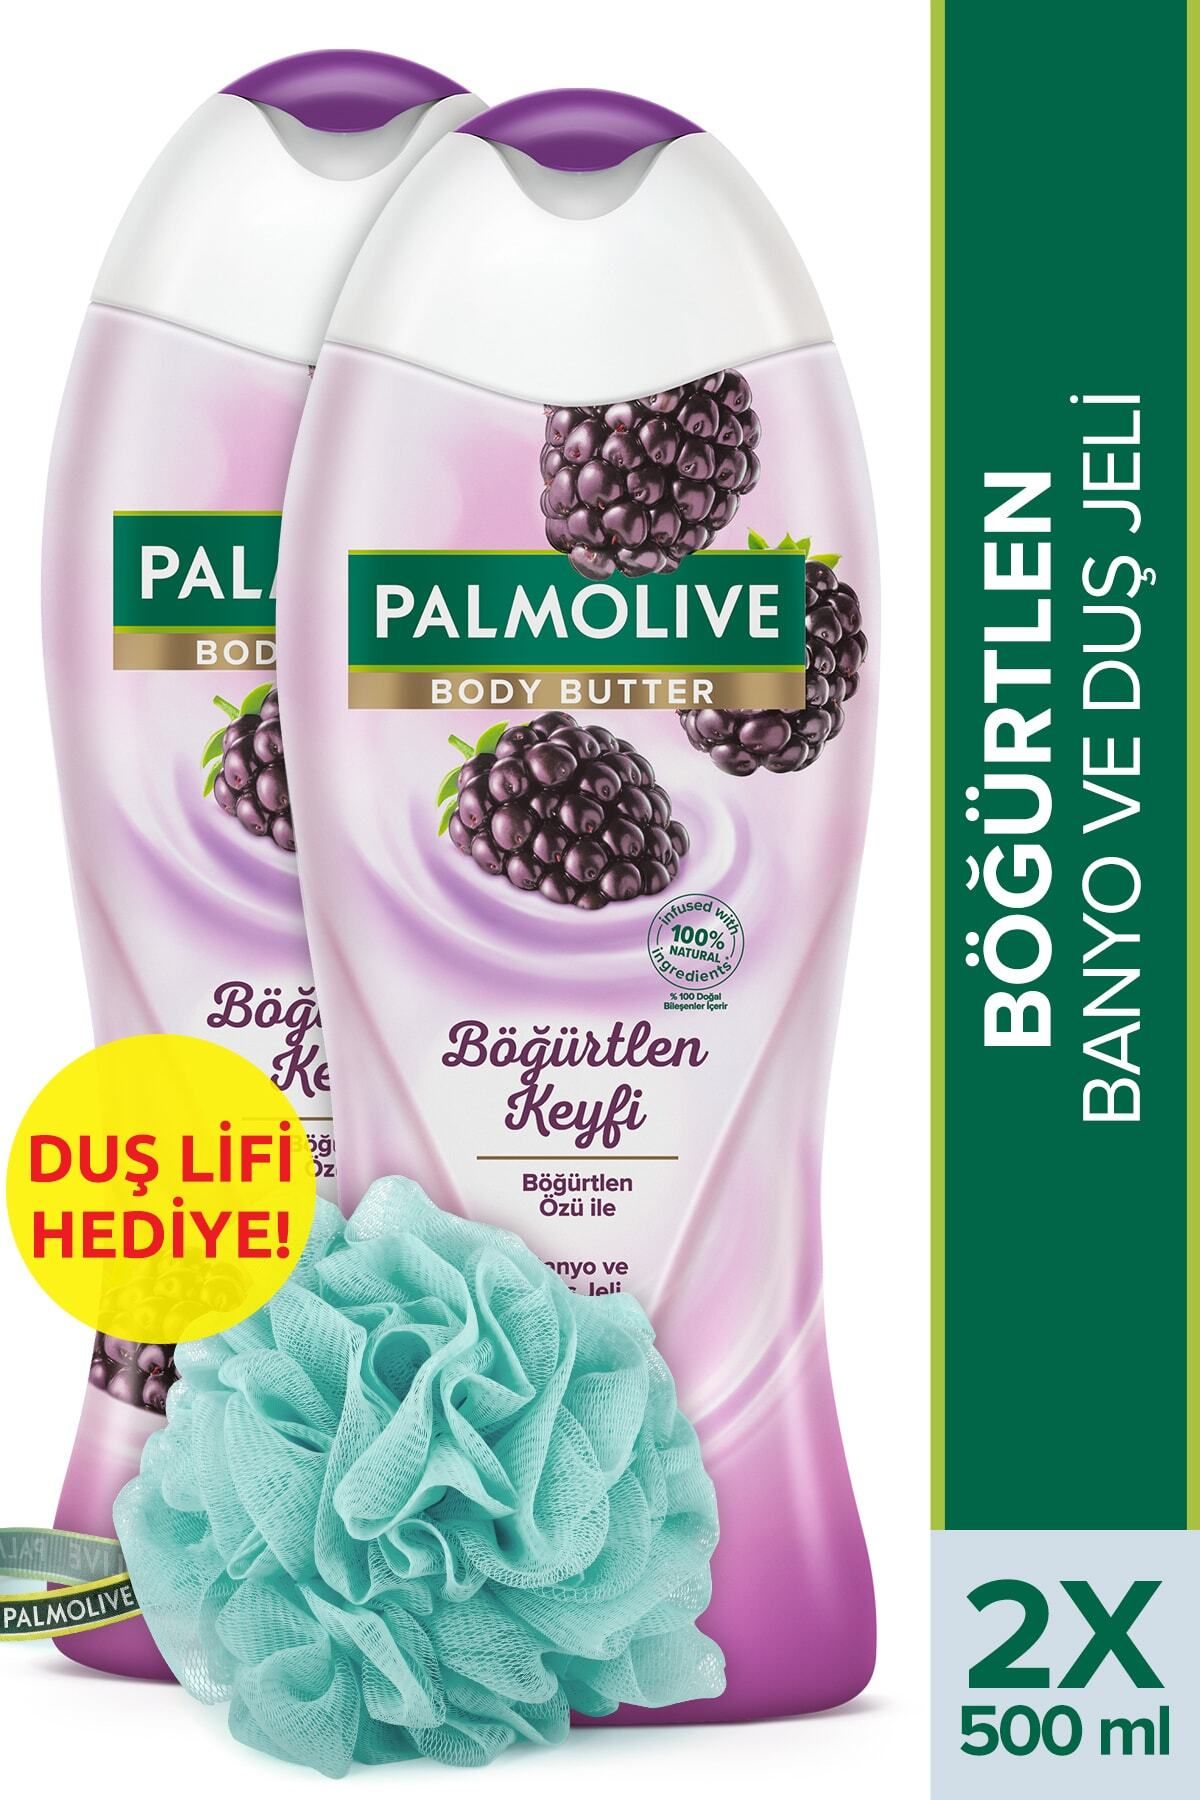 Palmolive Body Butter Böğürtlen Keyfi Banyo ve Duş Jeli 500 ml x 2 Adet + Duş Lifi Hediye